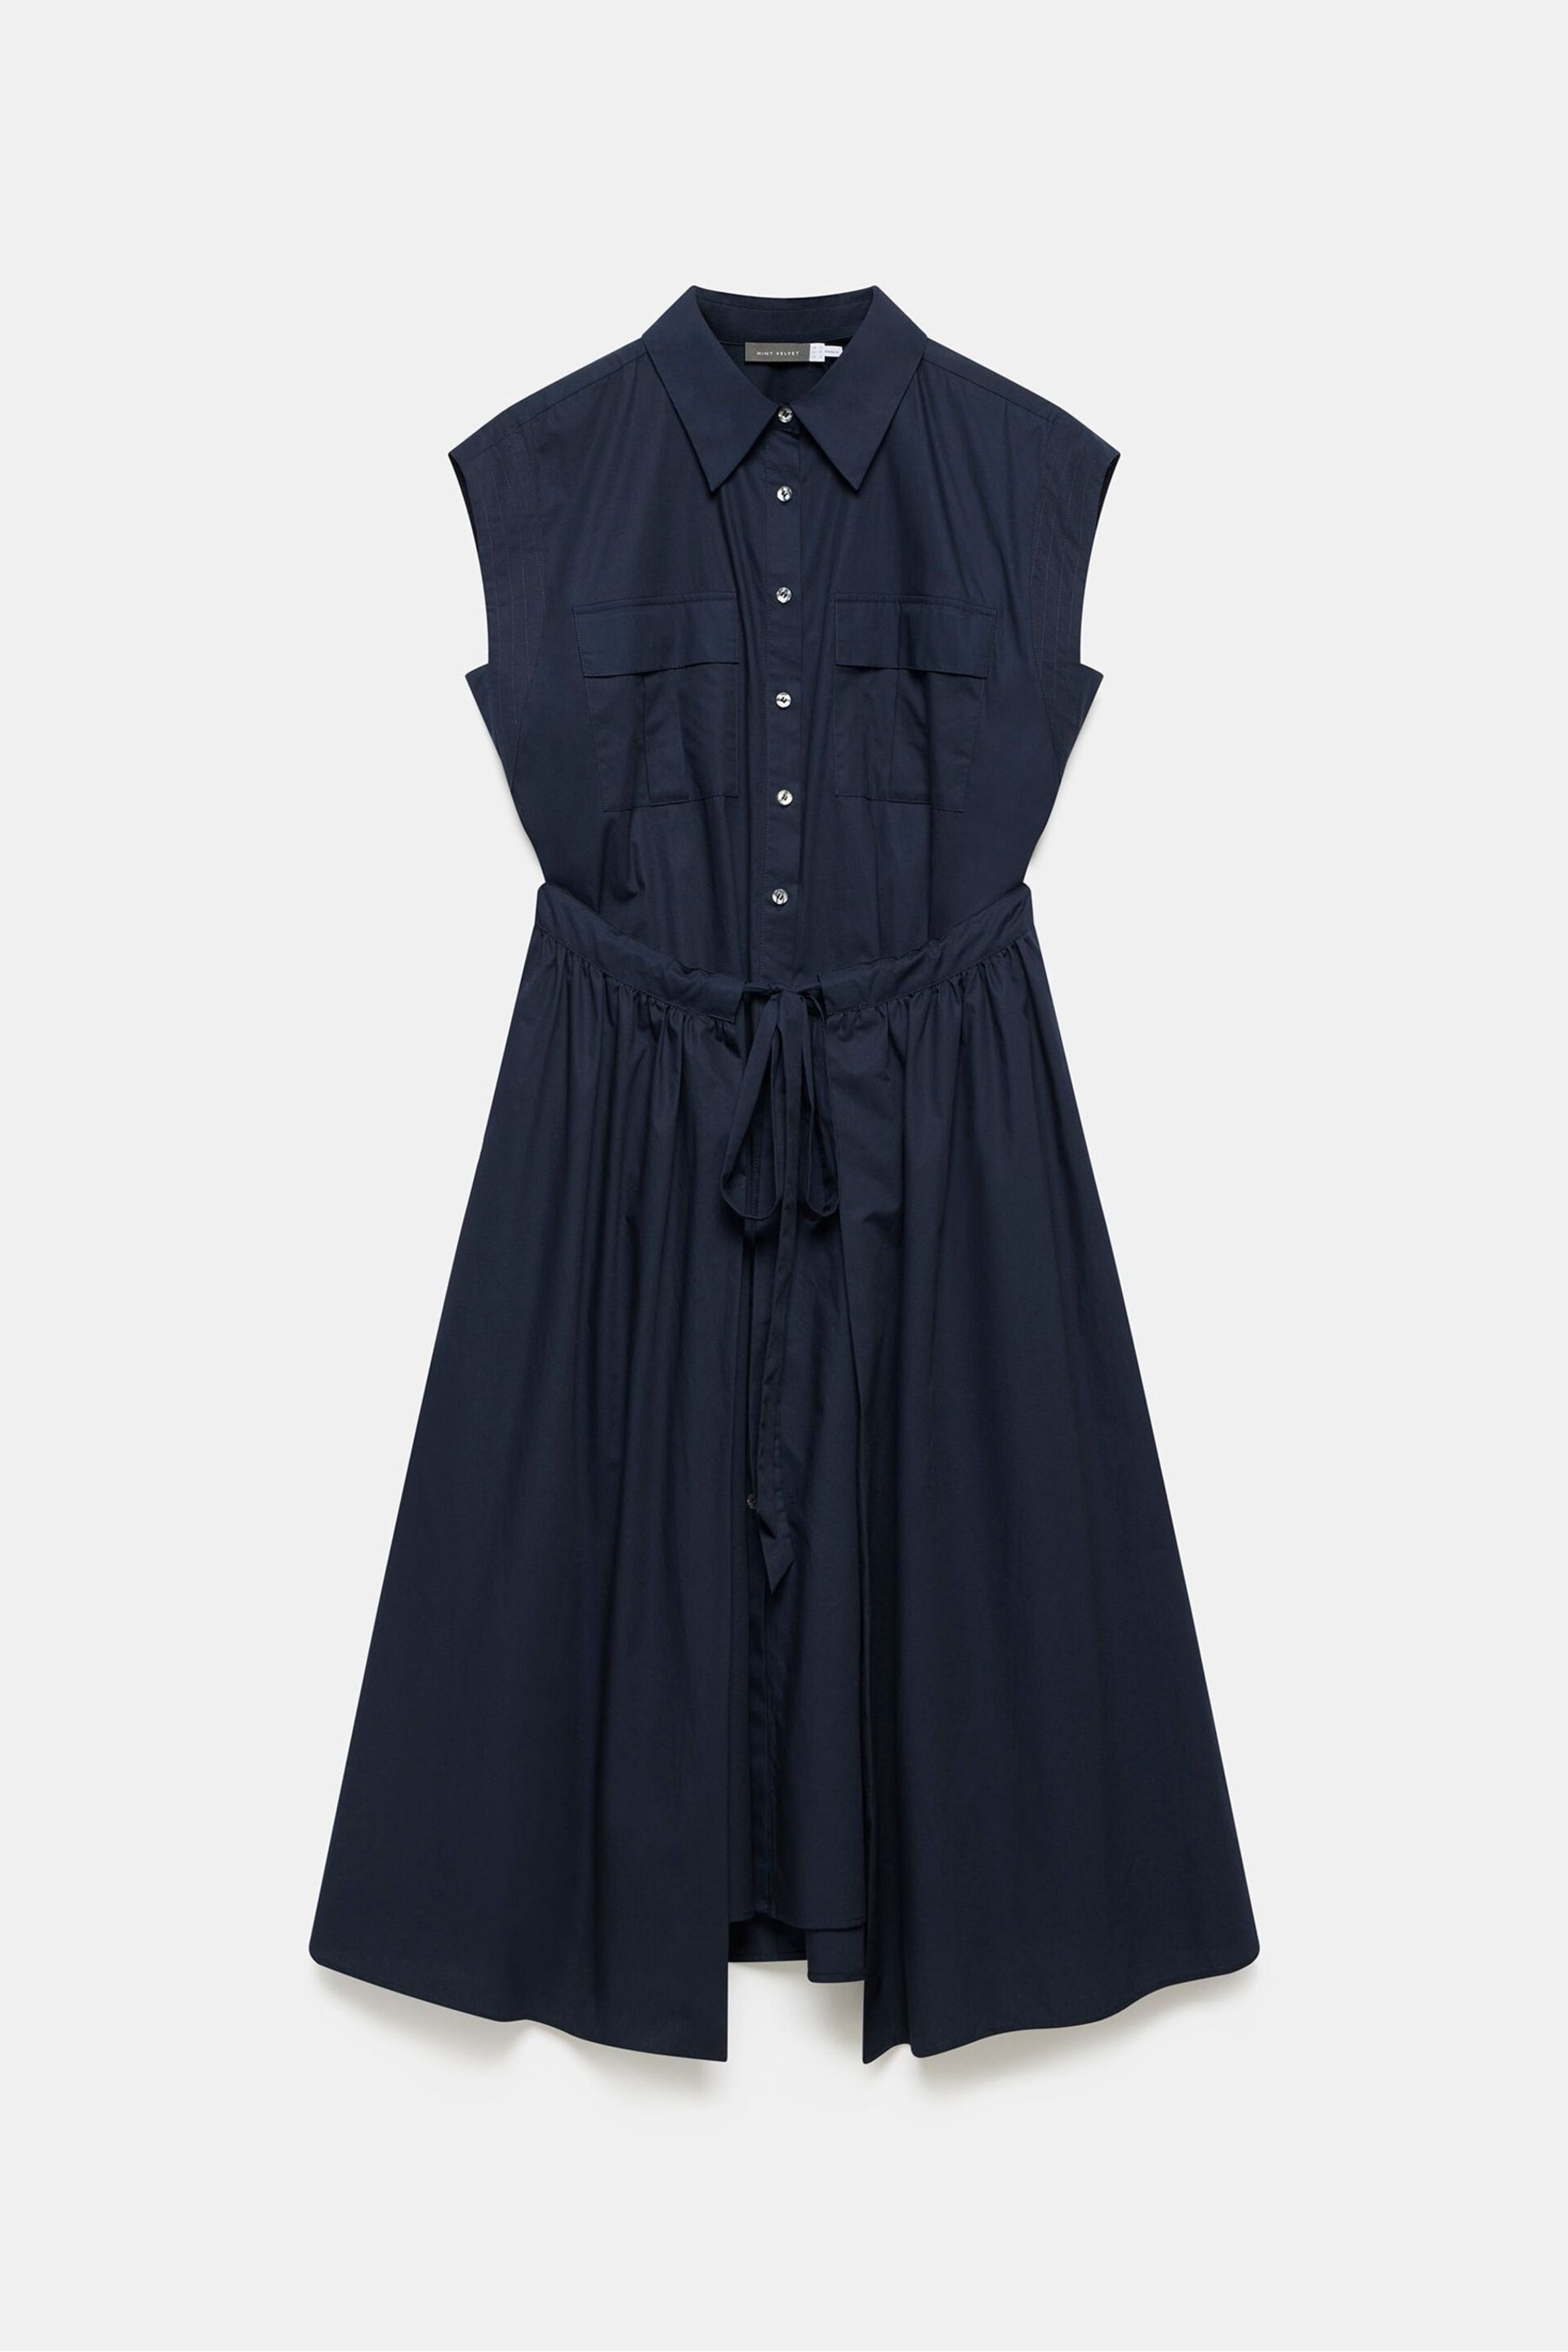 Mint Velvet Blue Cotton Wrap Midi Shirt Dress - Image 3 of 4